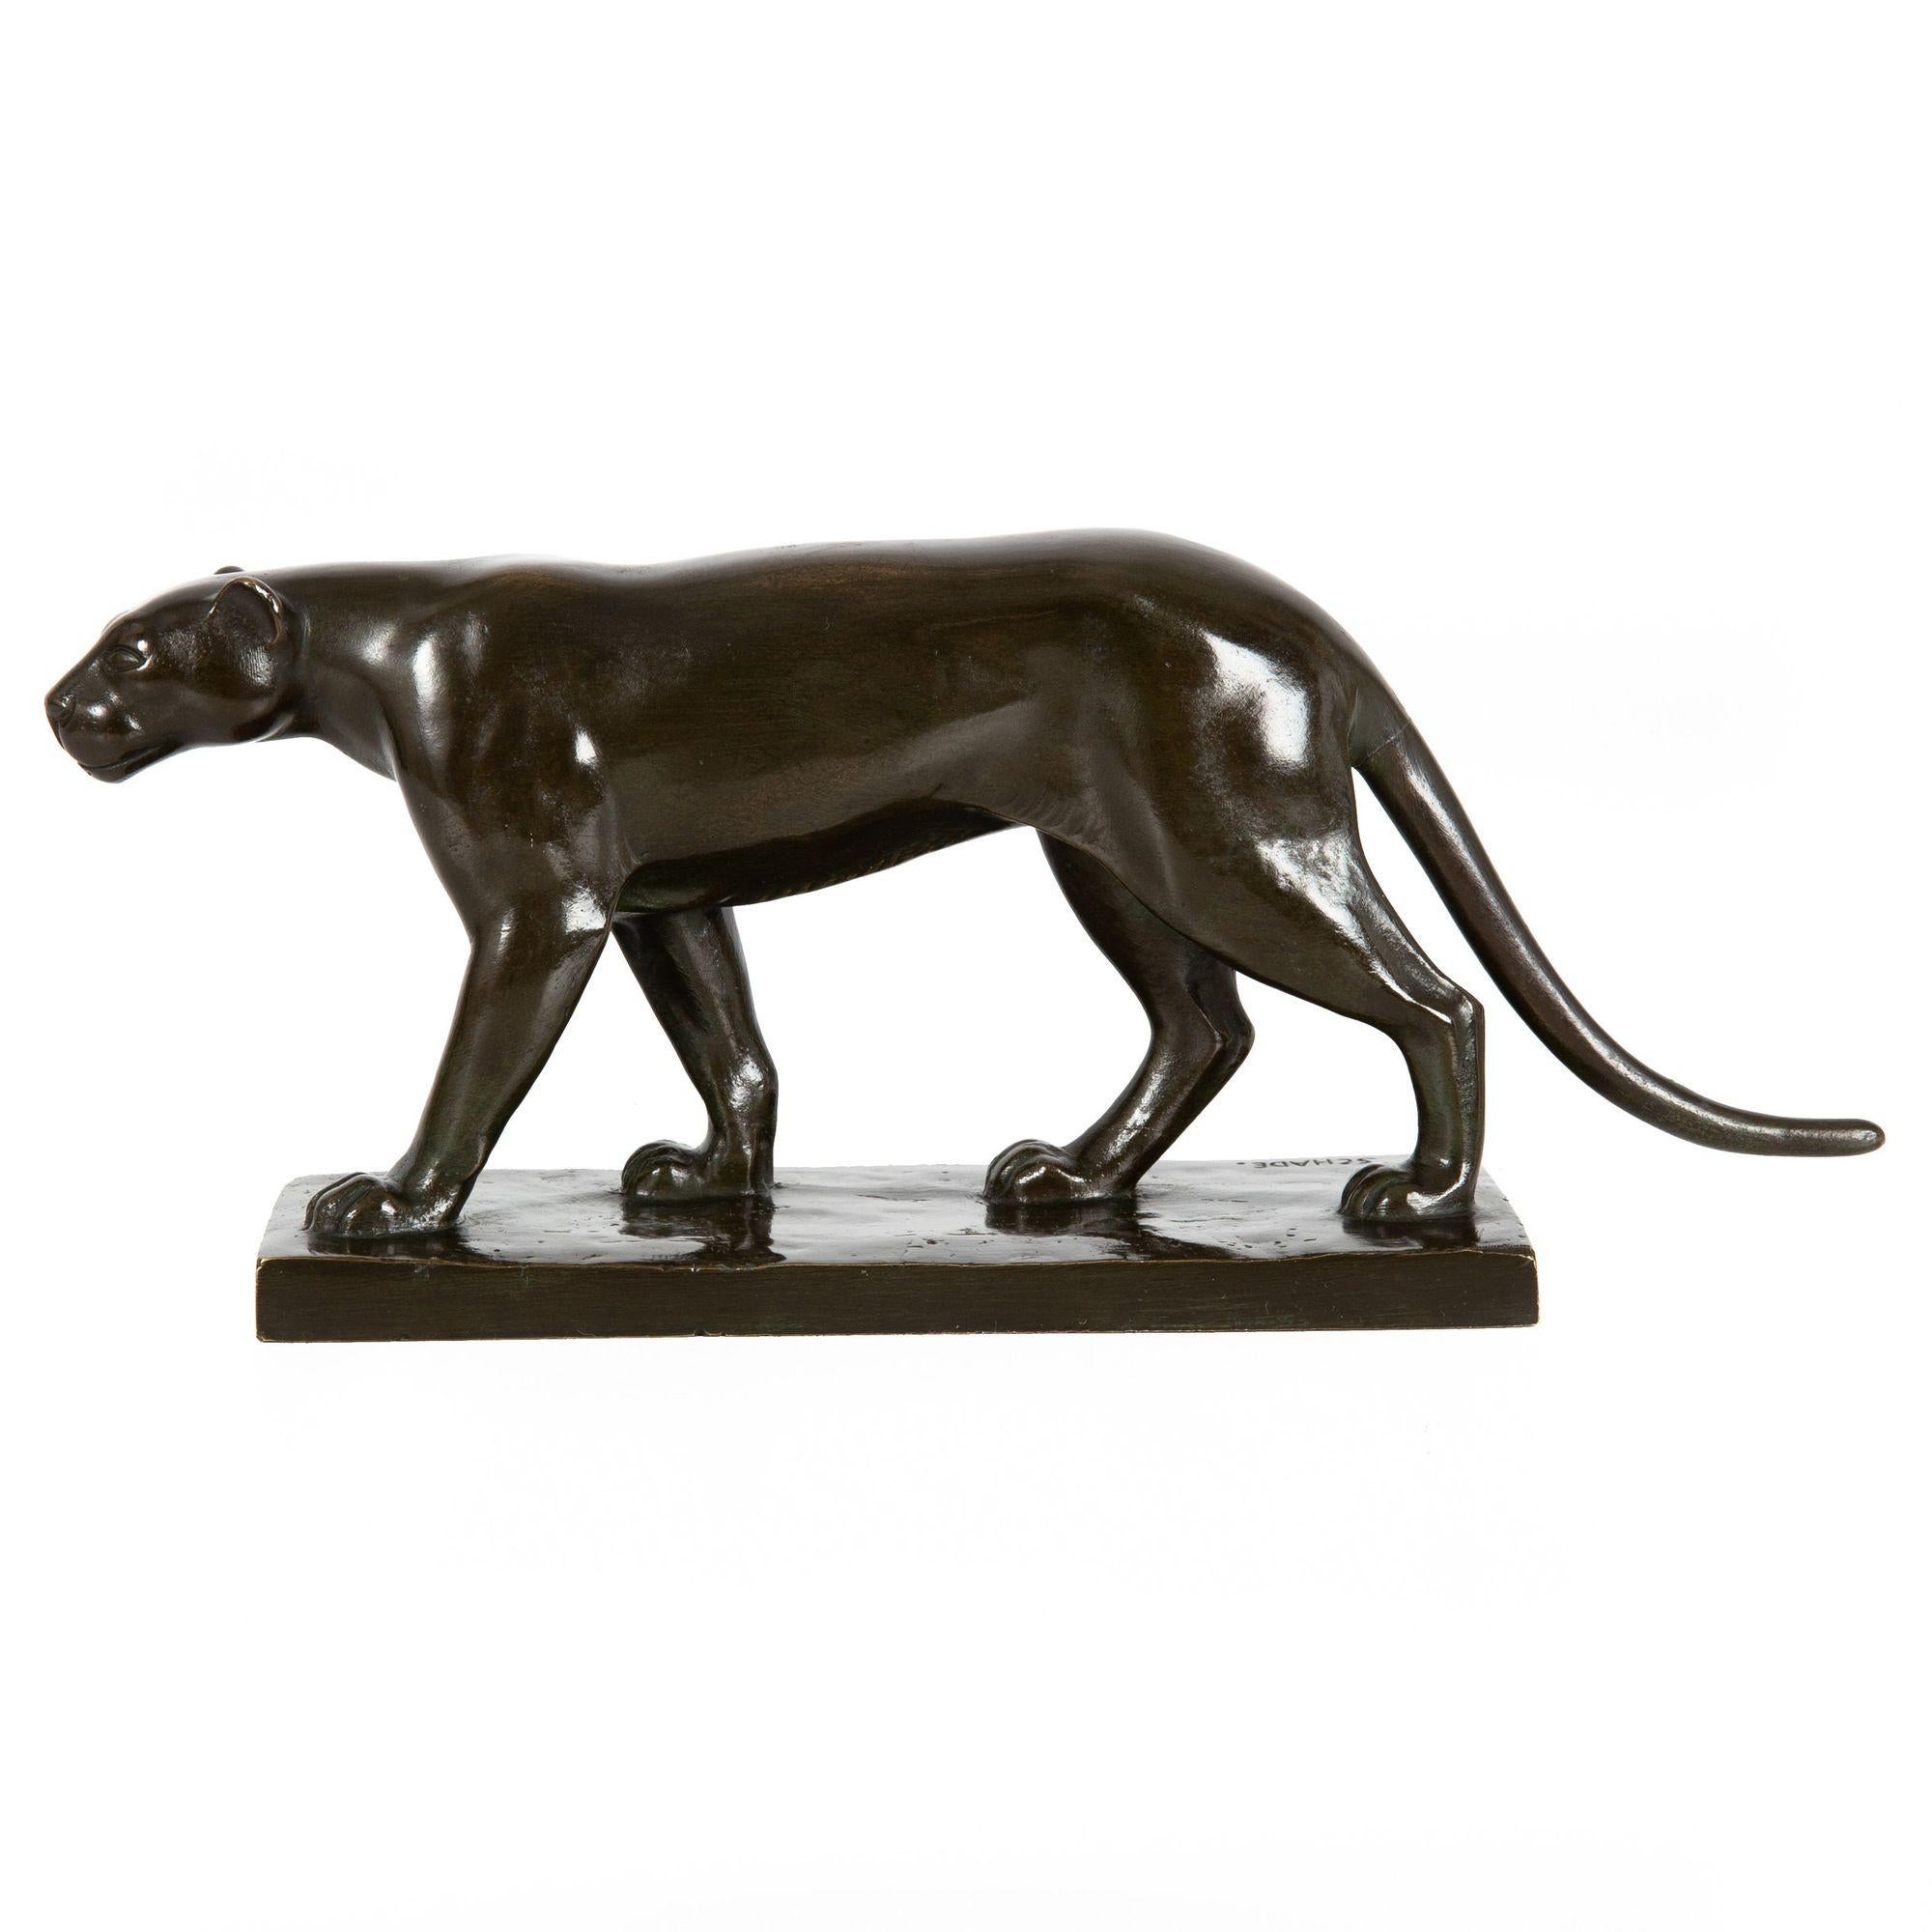 WILHELM SCHADE
German, 1892-1958

Stalking Panther

Patinated bronze  Signed to base 